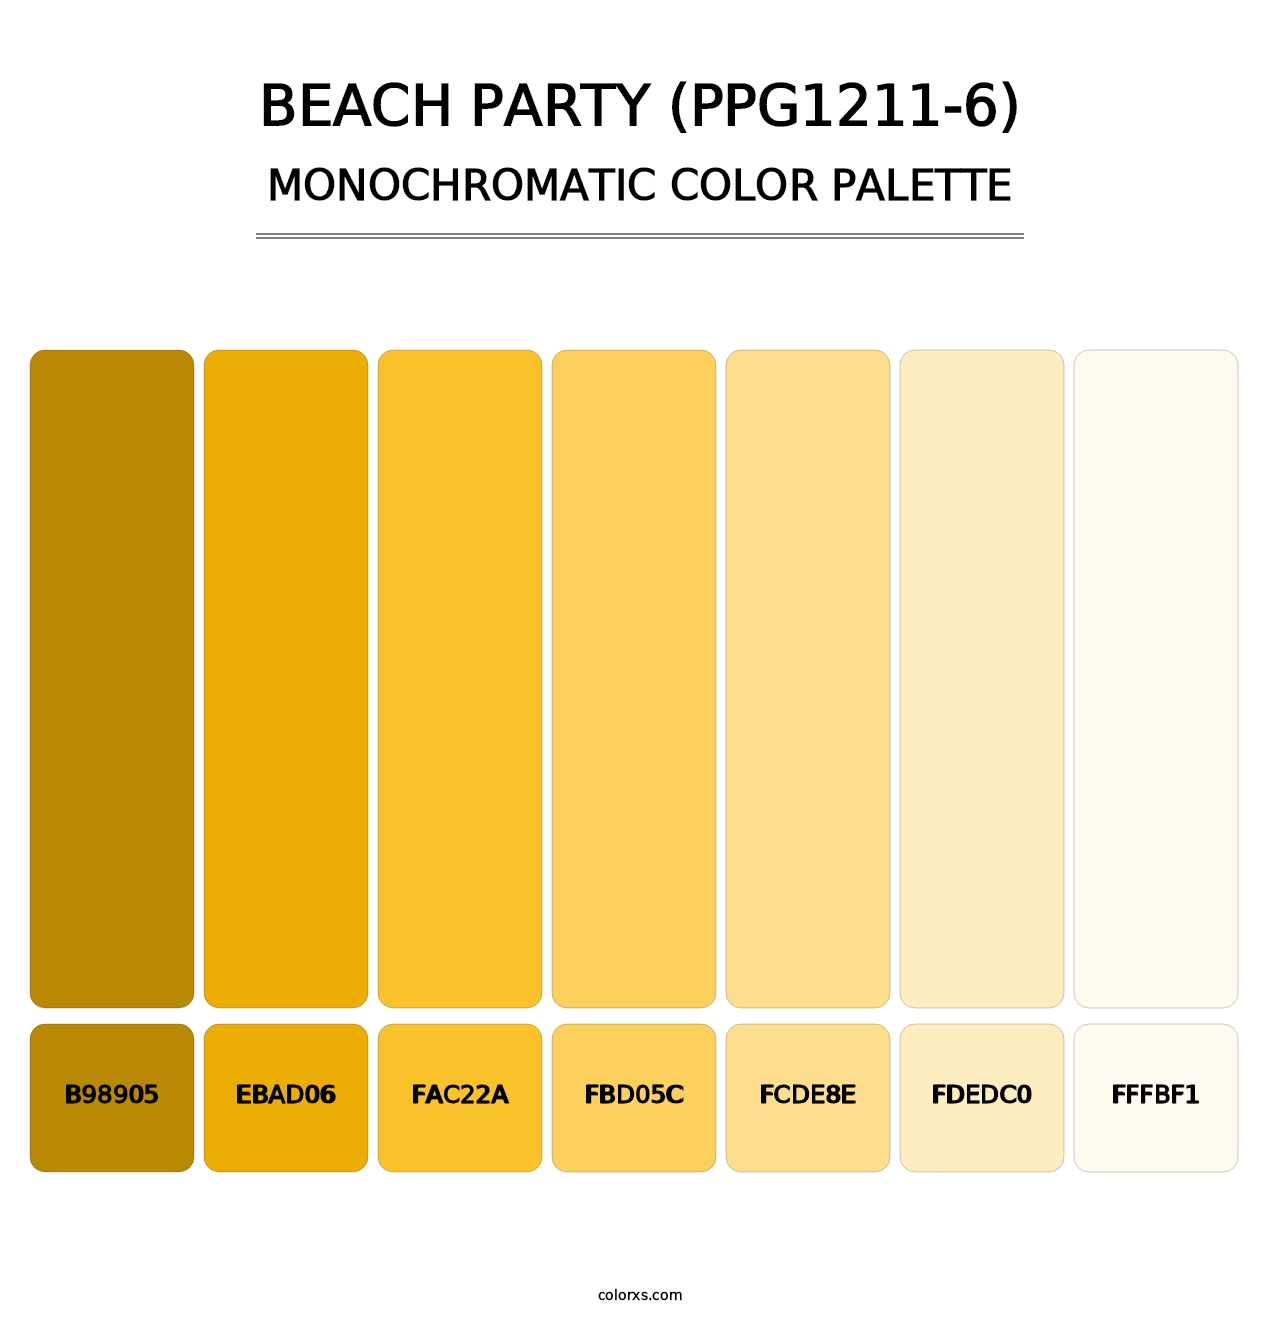 Beach Party (PPG1211-6) - Monochromatic Color Palette